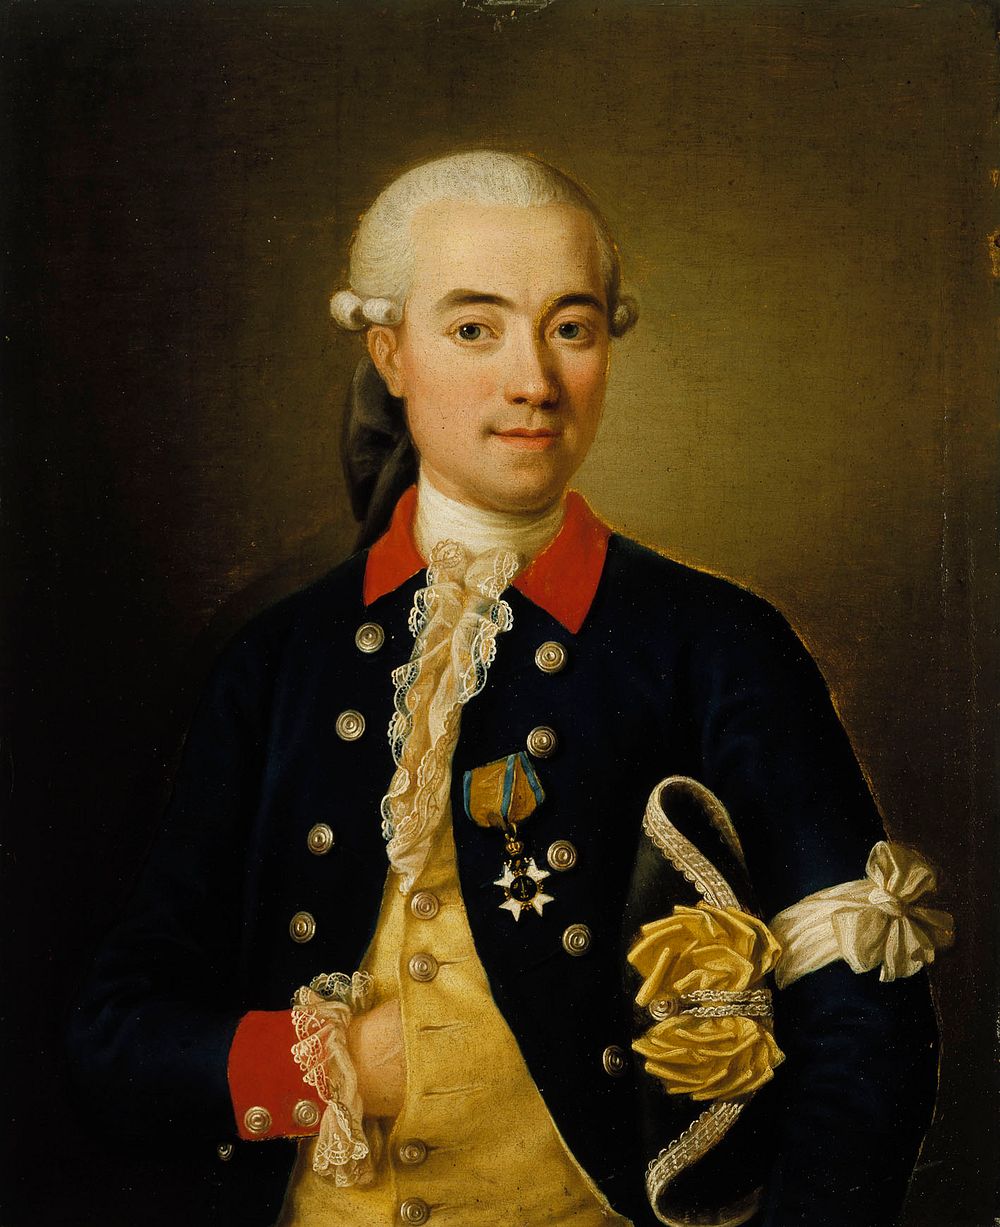 Captain carl adolf möllersvärd, 1775